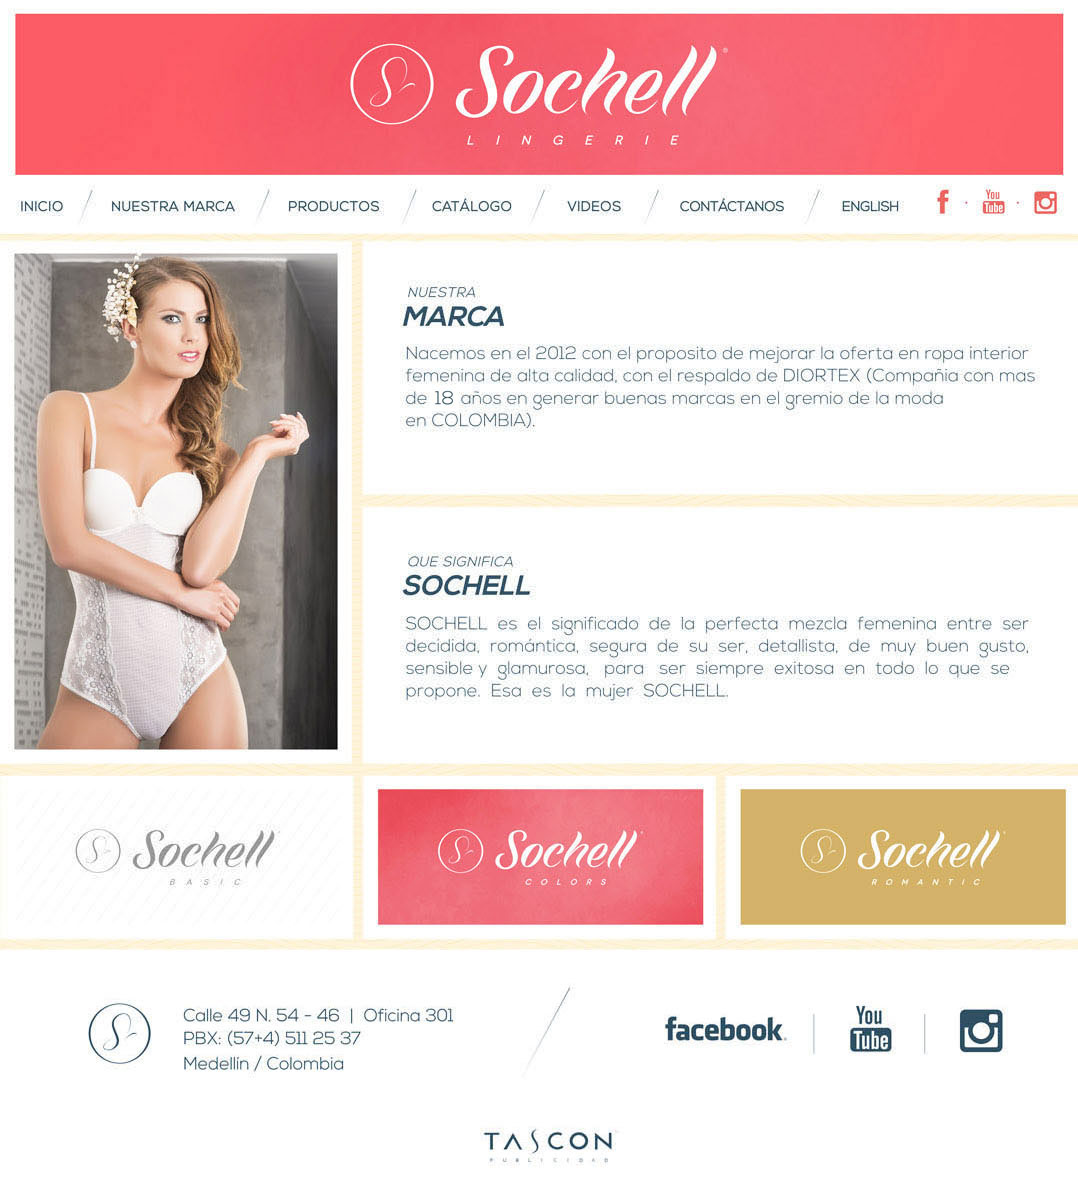 sochell Rebrand brand logo new Website design tasconpublicidad medellin colombia lingerie Ropa Interior mujer